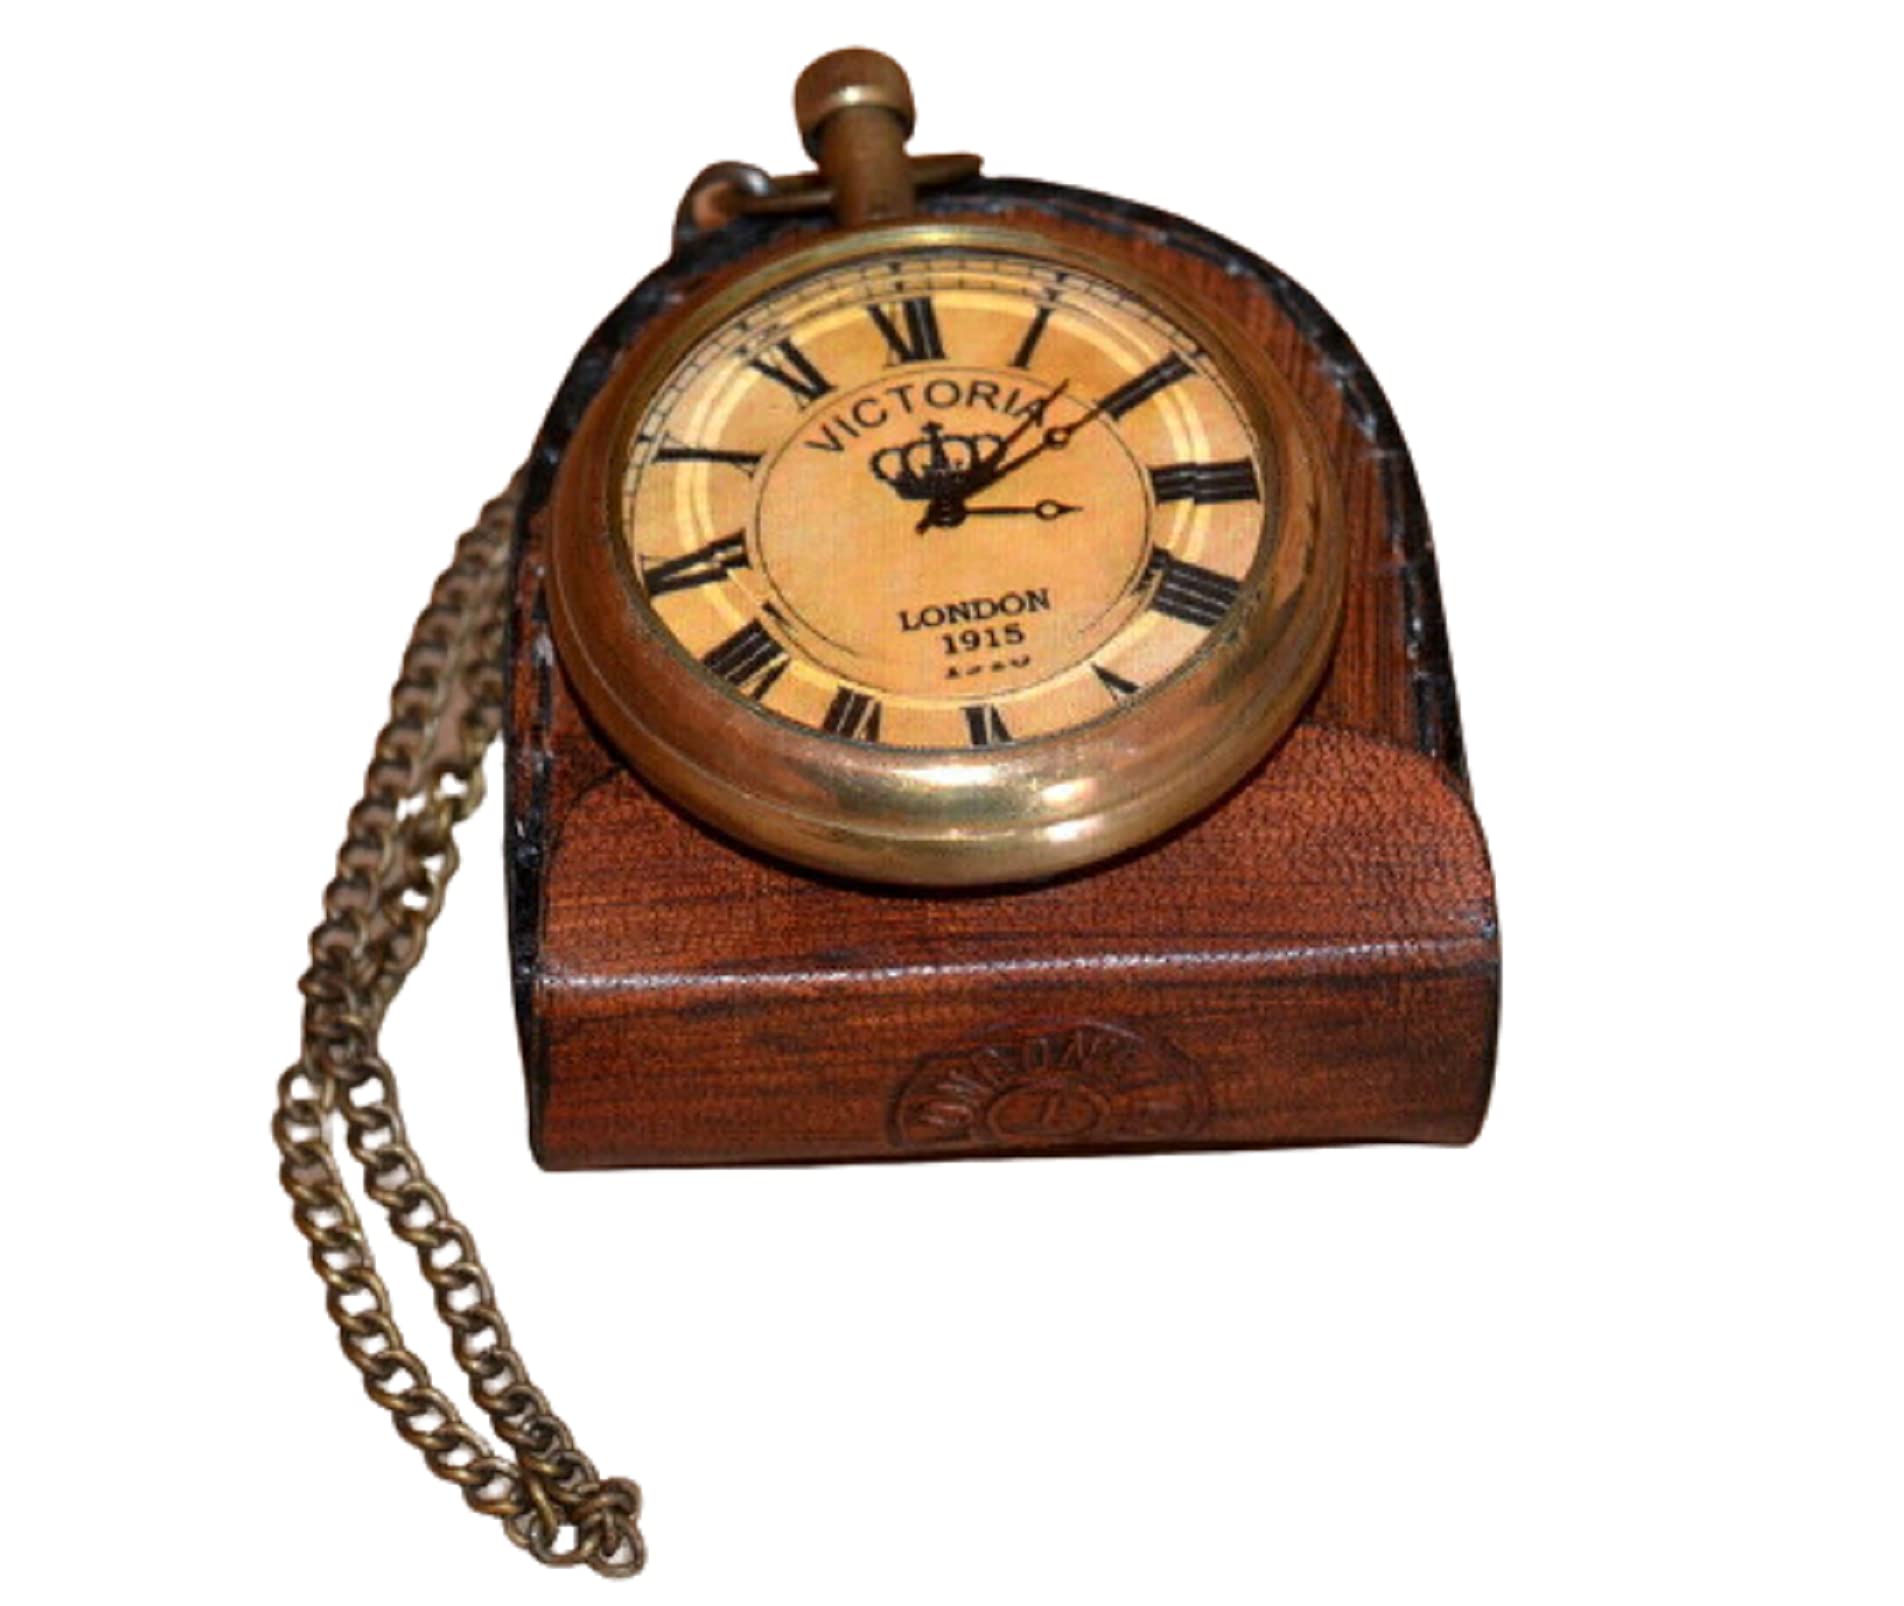 Hassanhandicrafts Antique Vintage Maritime Brass Pocket Watch Kelvin & Hughes with Leather Box